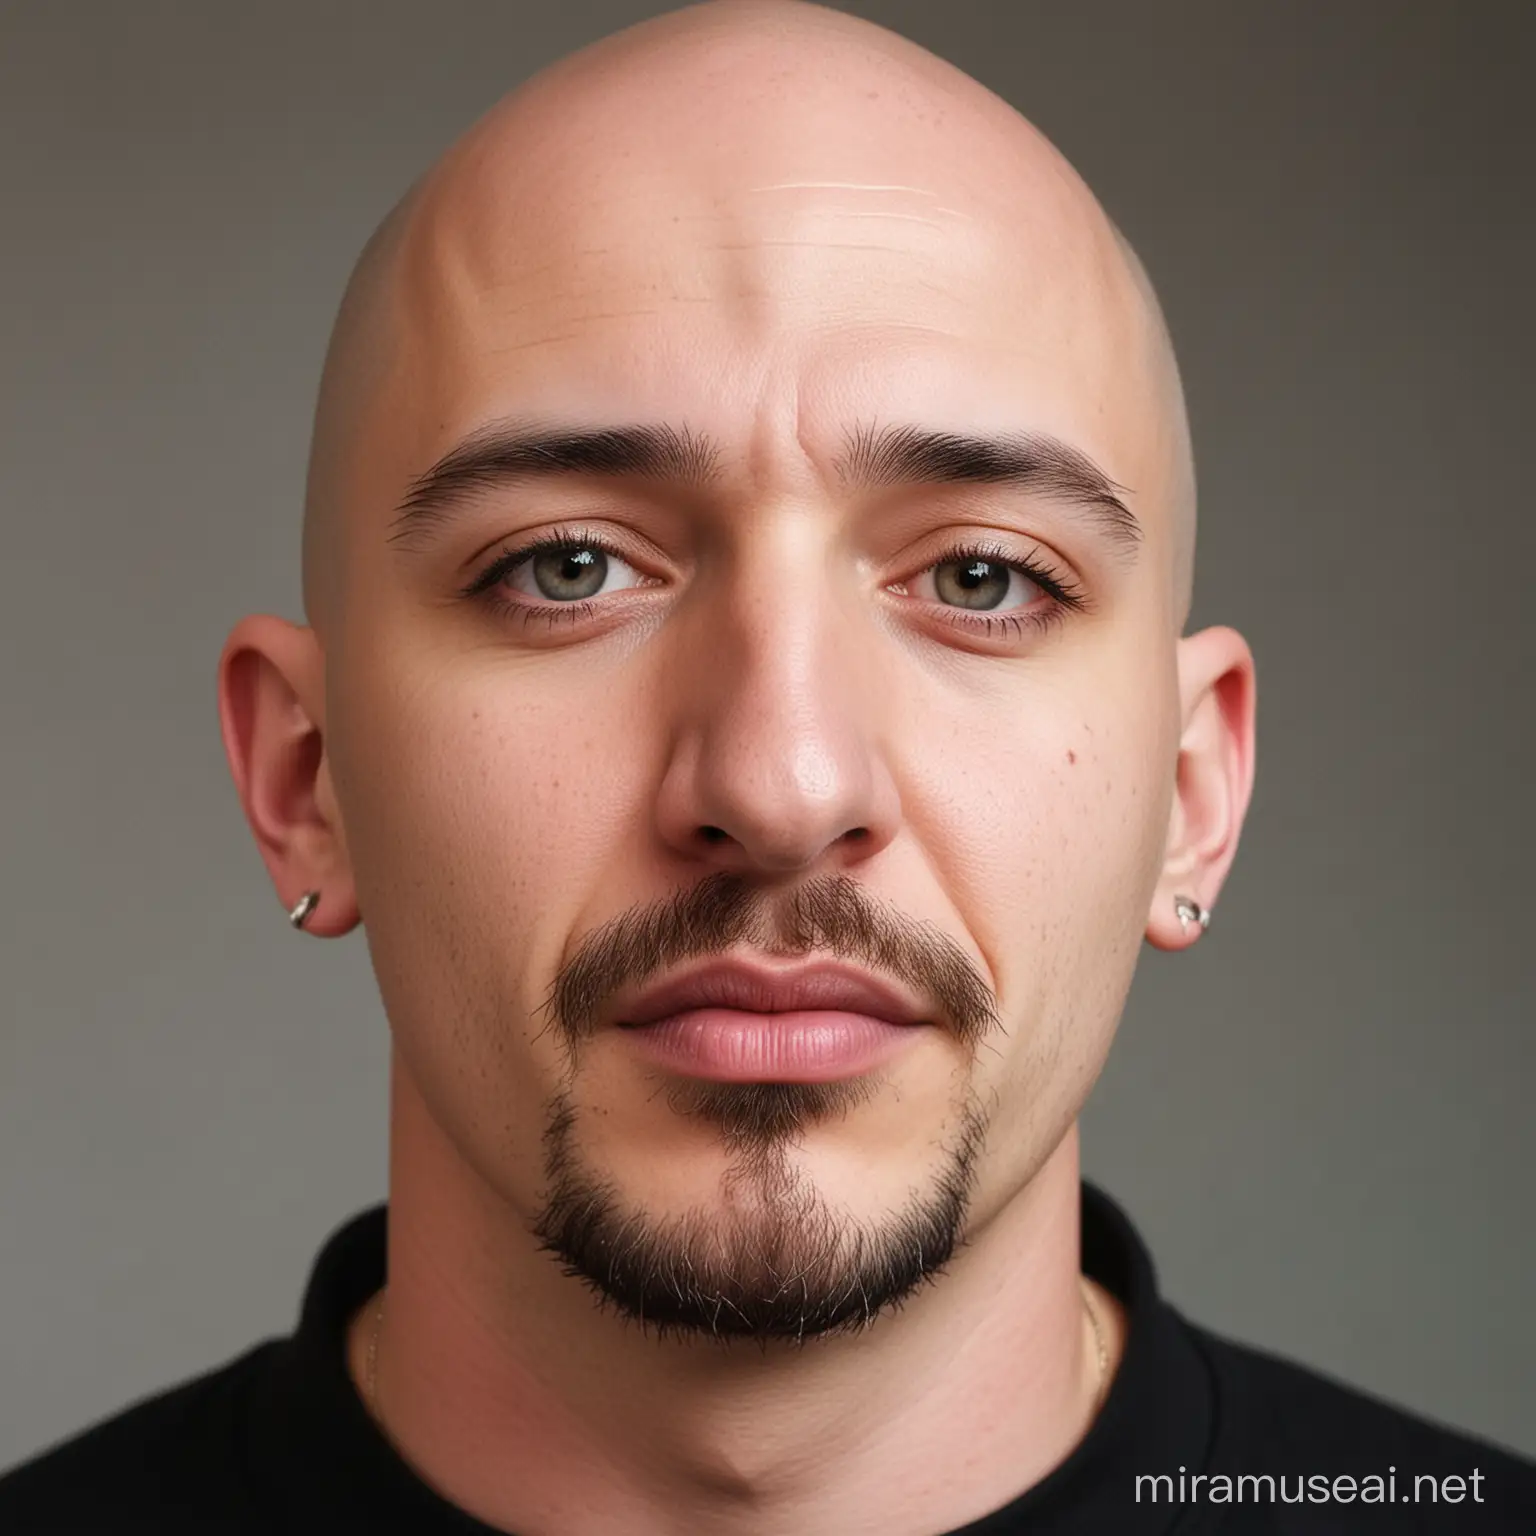 Bald Man with Nose Piercings Portrait of a Unique Individual